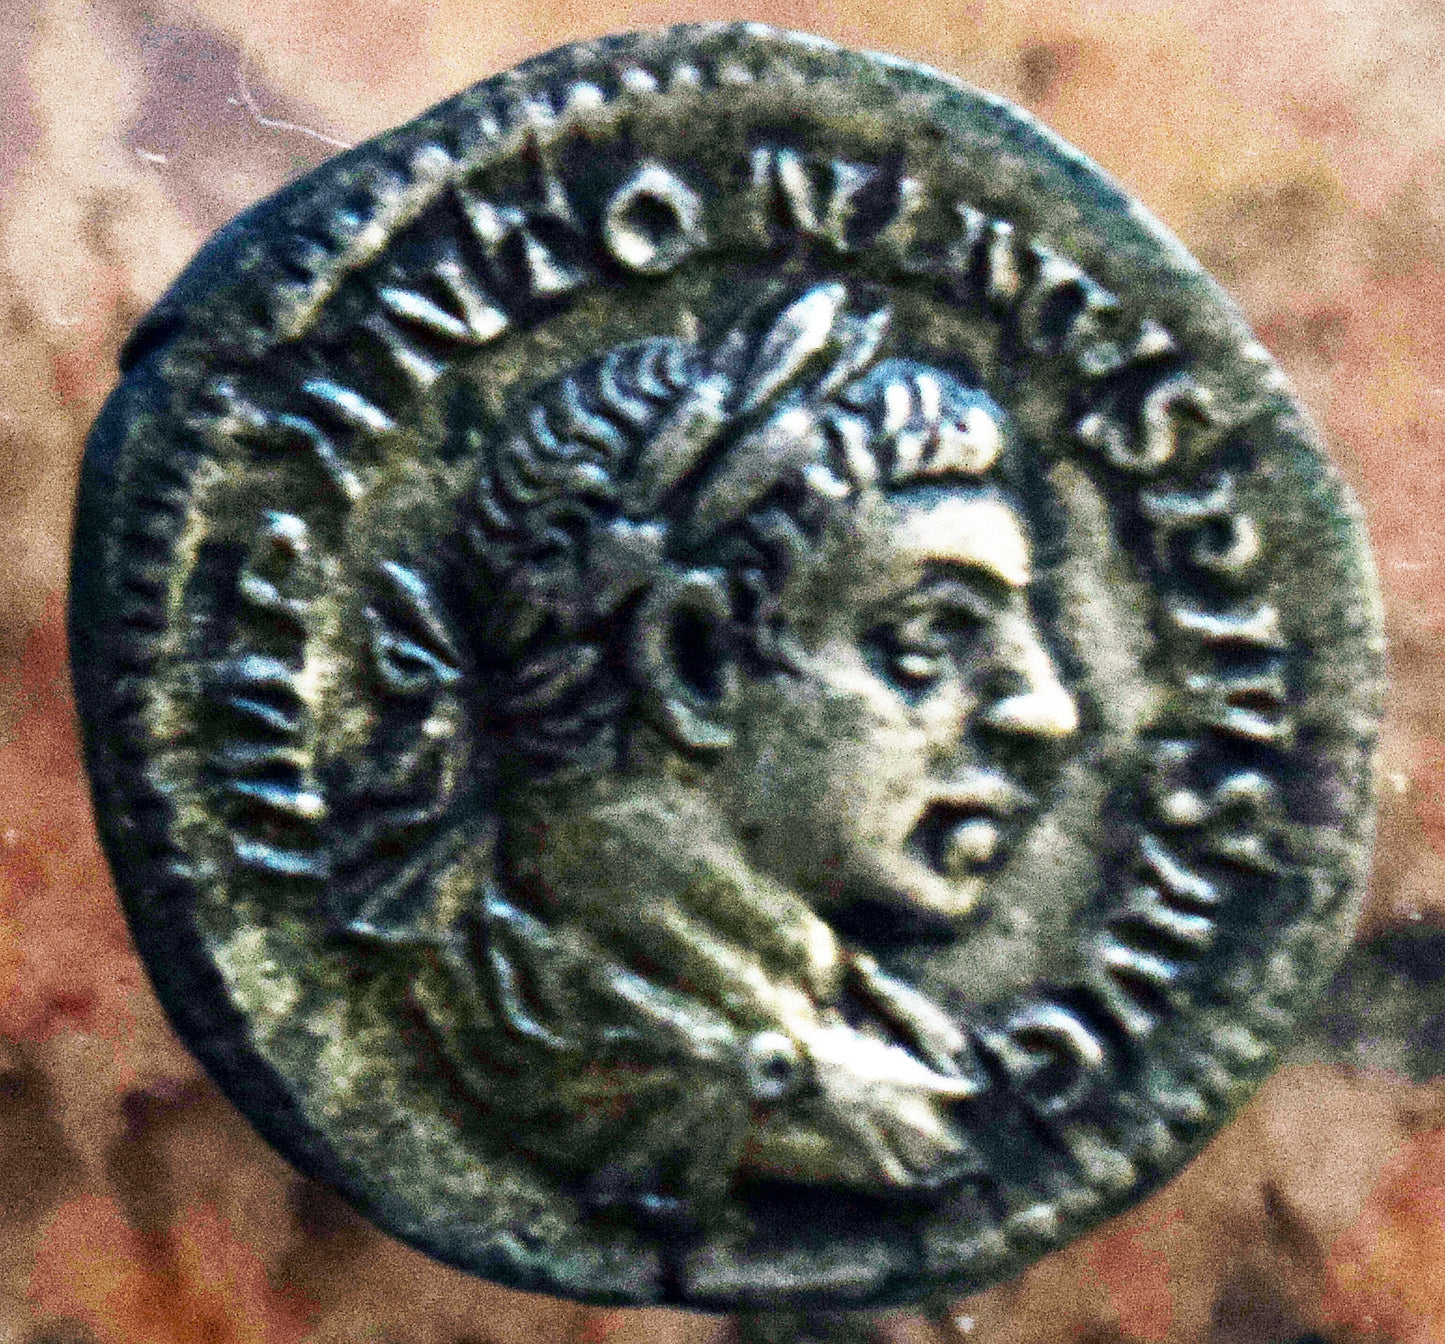 1800 year old Roman silver Denarius coin from the reign of Elagabalus